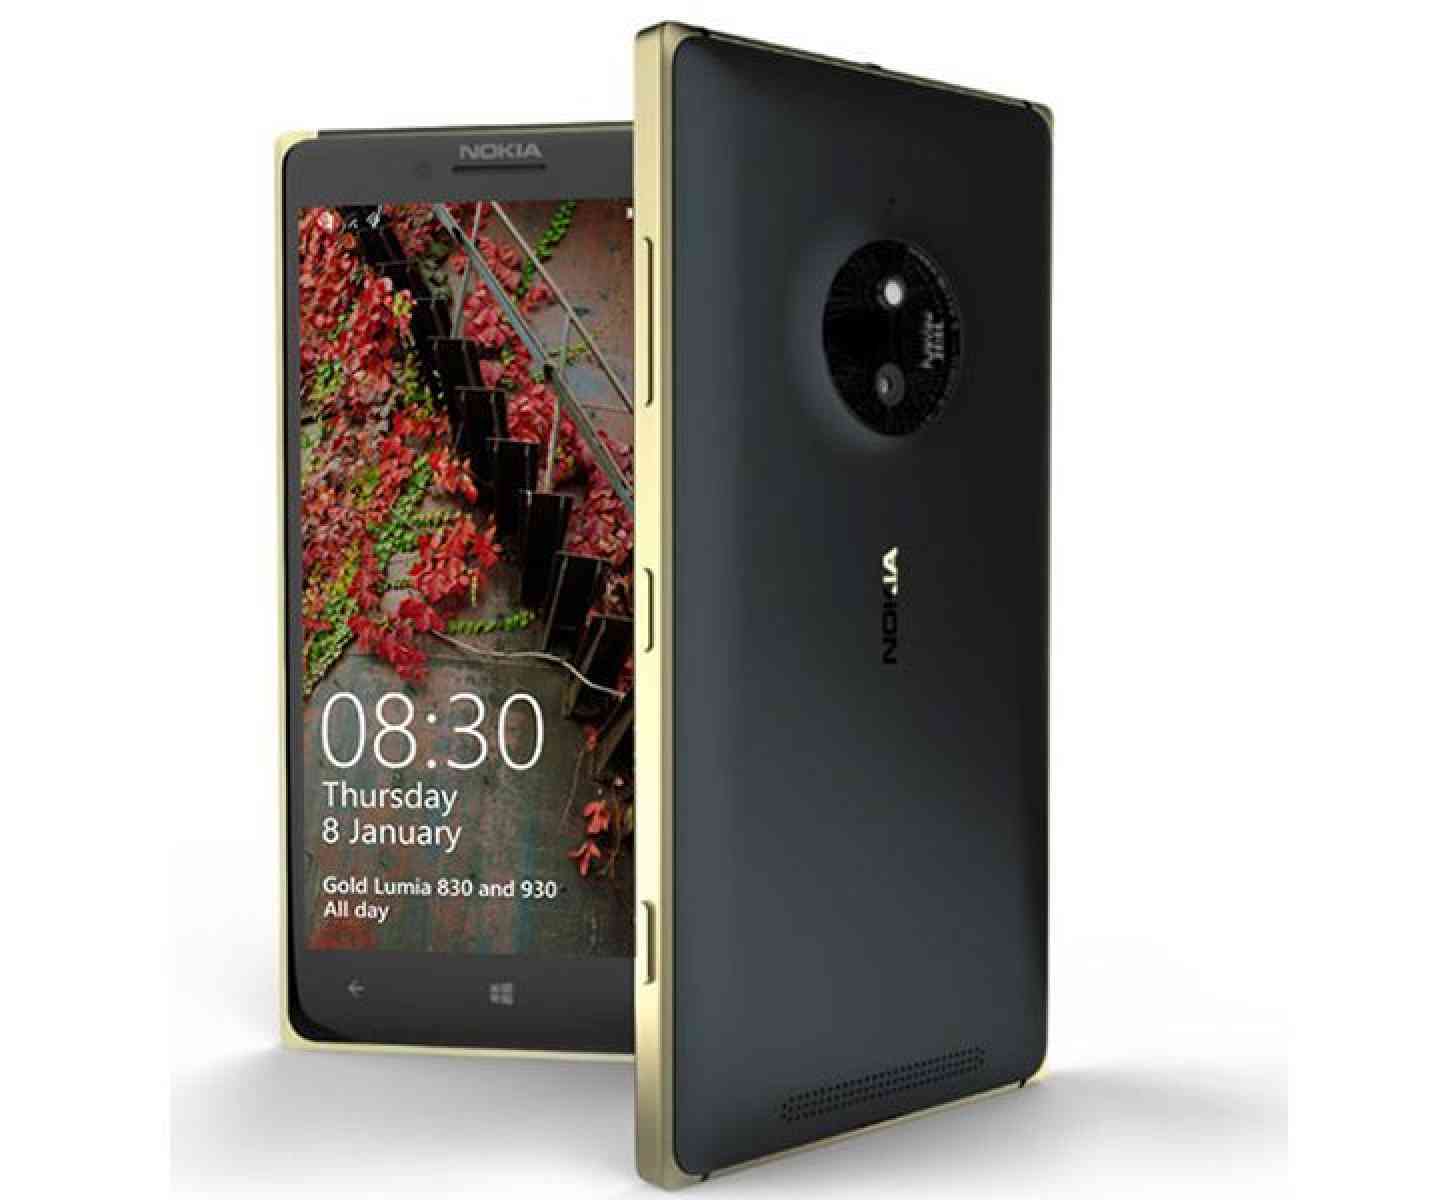 Gold Nokia Lumia 830 black official